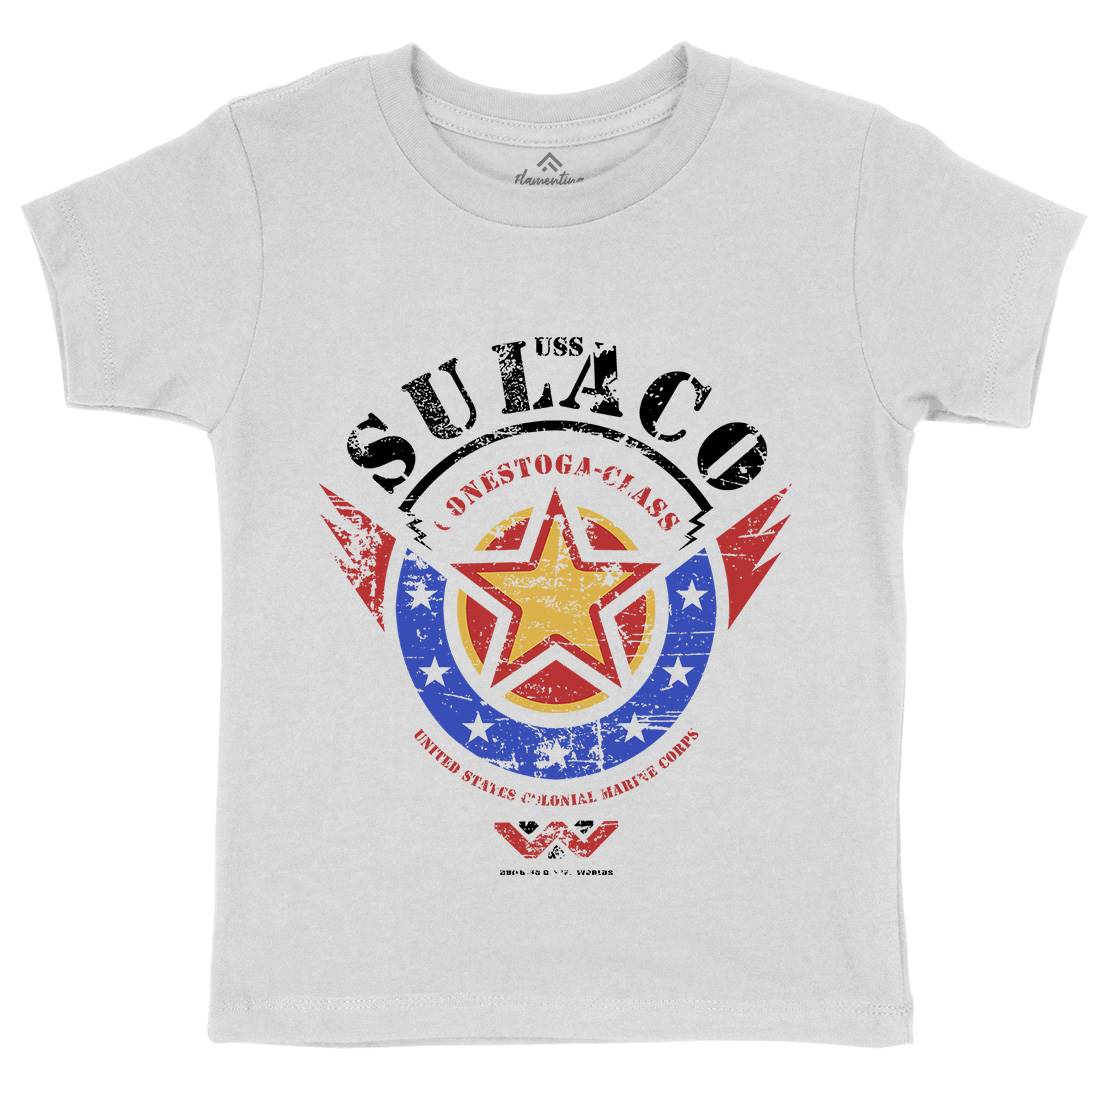 Uss Sulaco Kids Crew Neck T-Shirt Space D275